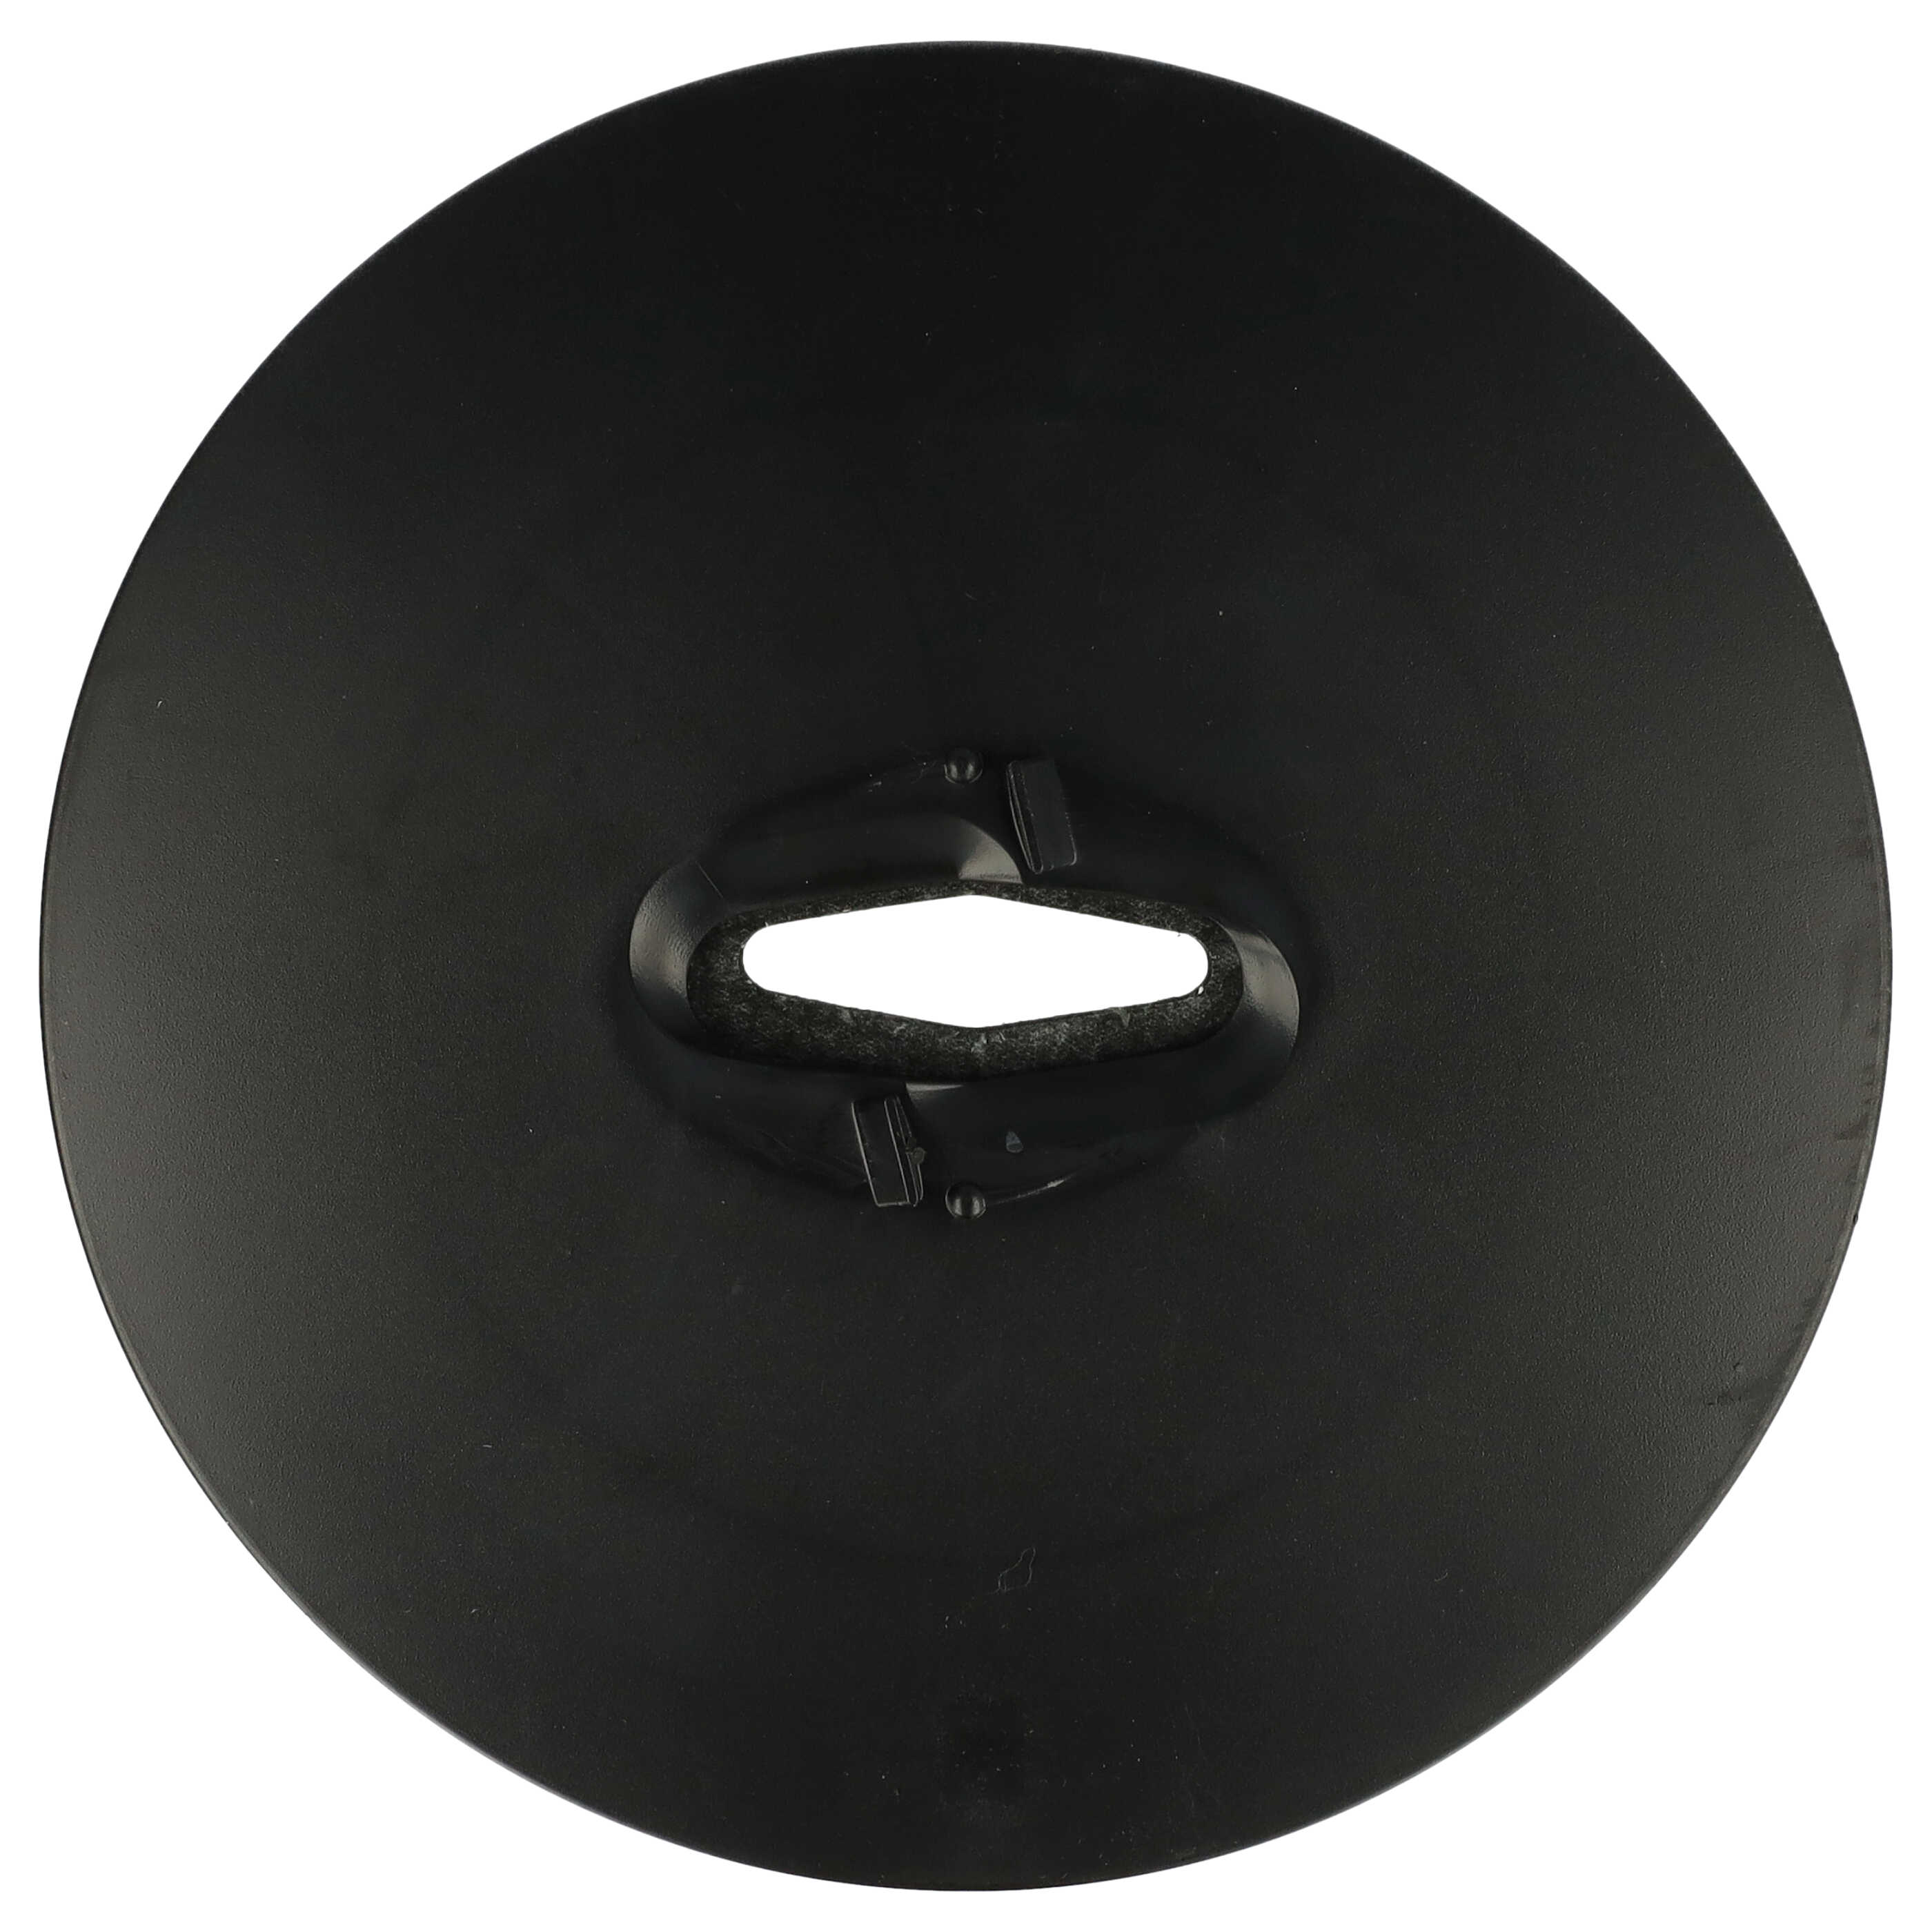 Filtr do odkurzacza Royal zamiennik Dirt Devil 8106-01 - filtr okrągły, czarny / biały